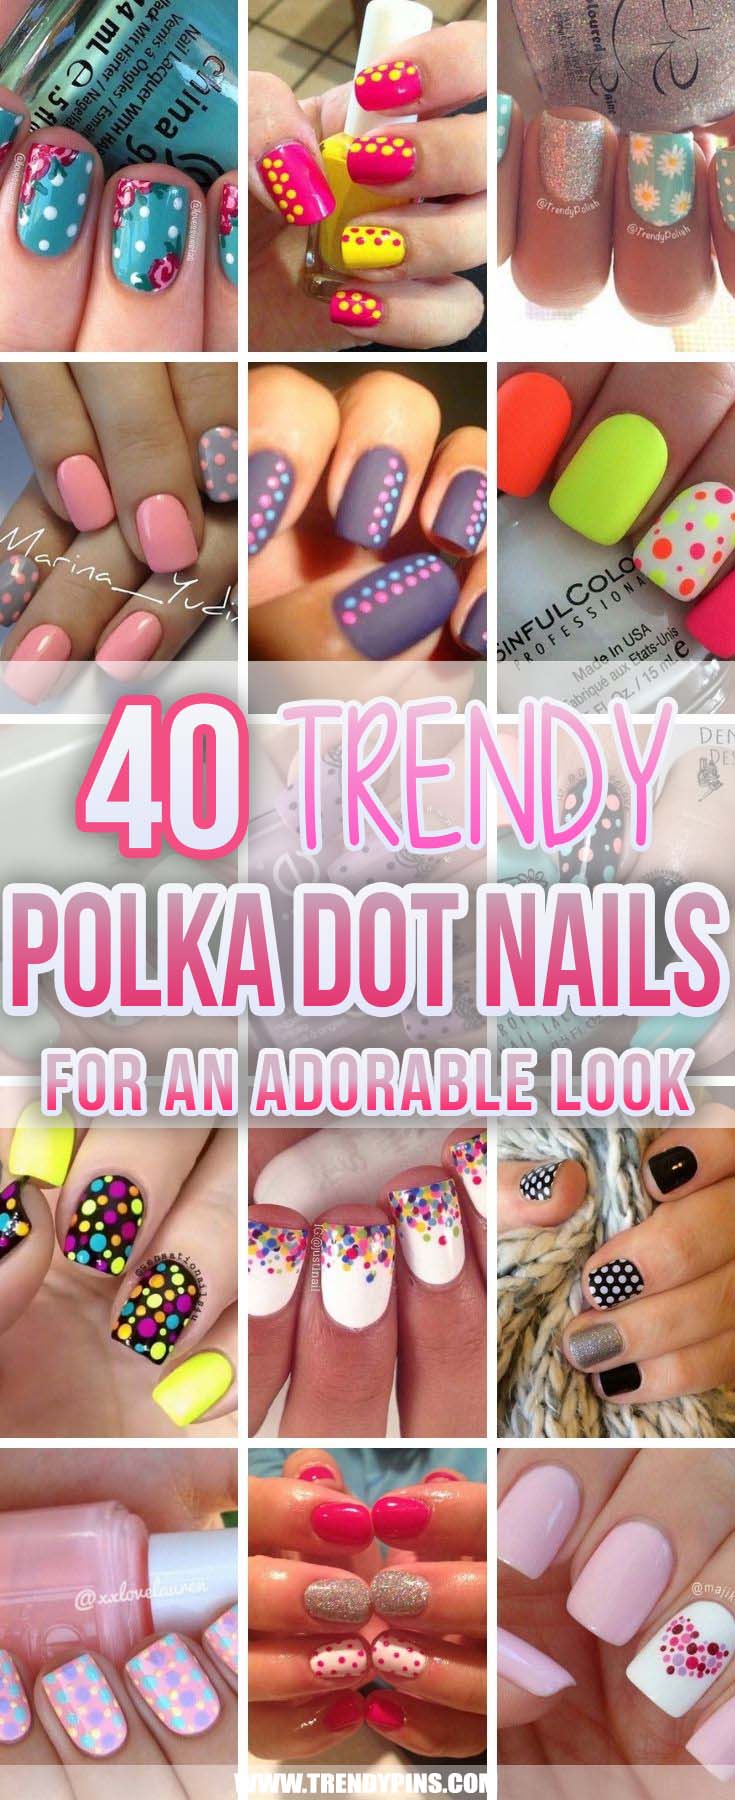 40 Trendy Polka Dot Nails For An Adorable Look #polkadotnails #trendypins